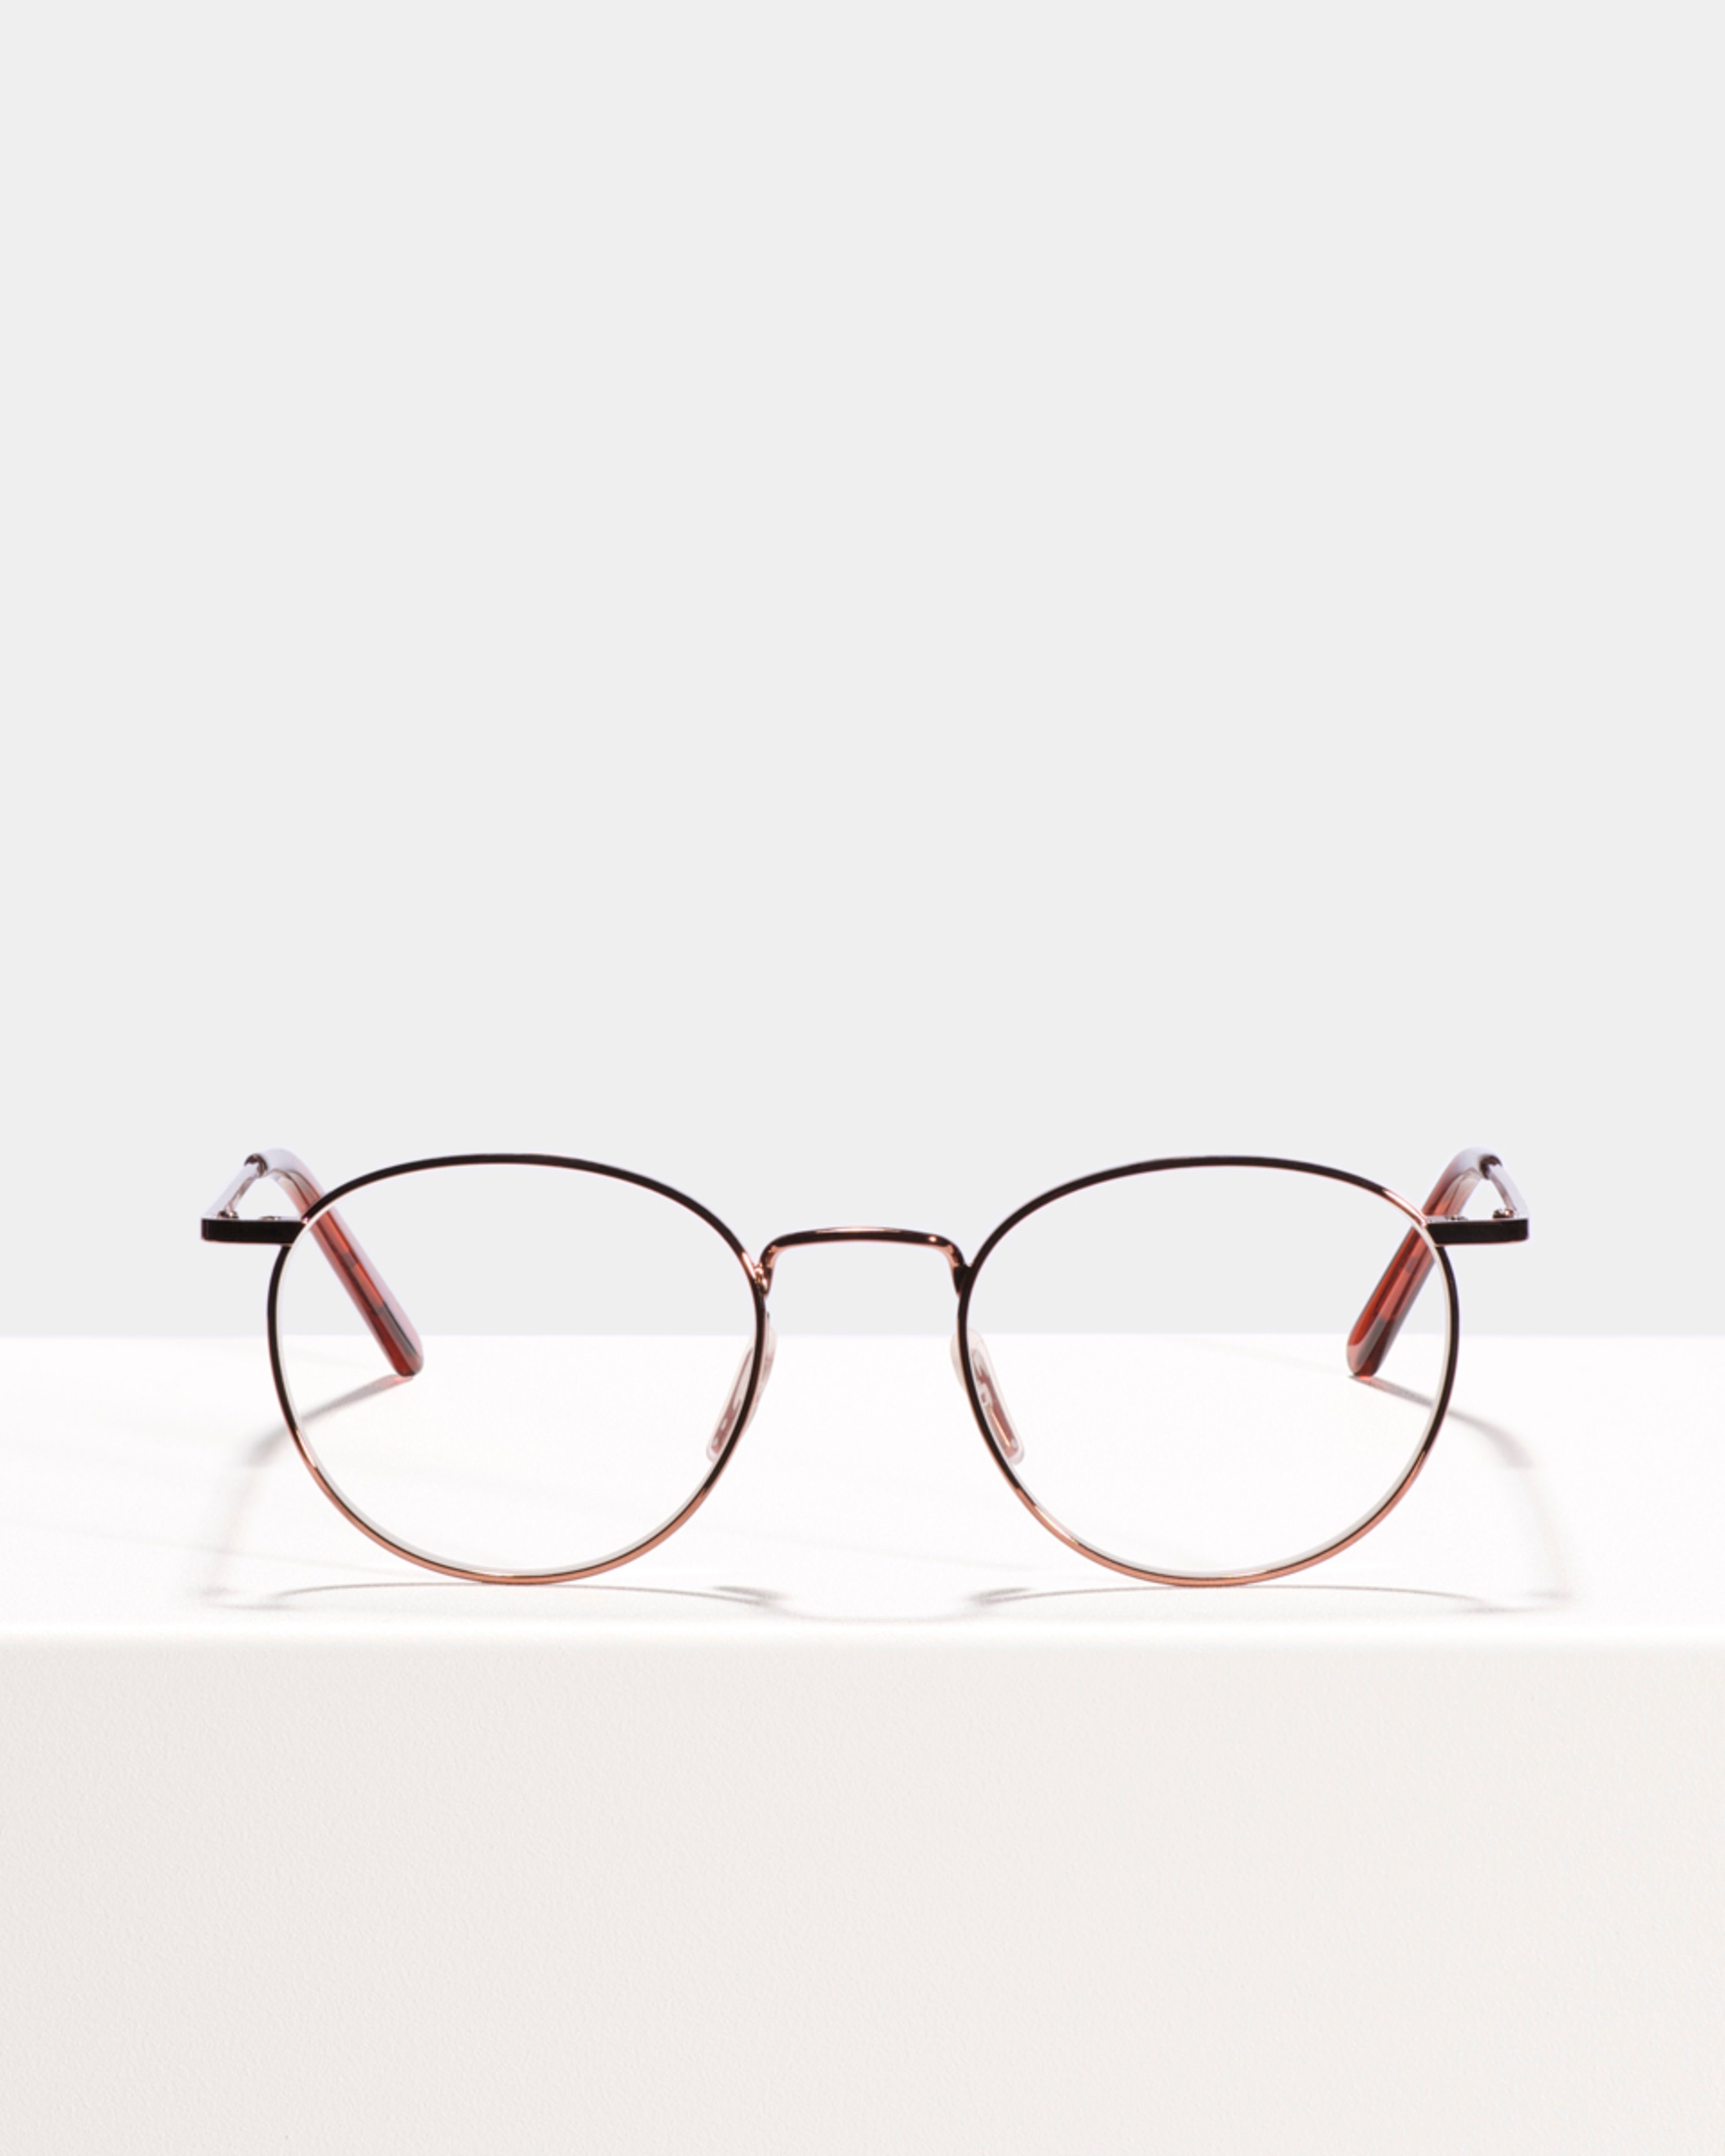 Ace & Tate Glasses | redonda metal in Marrón, Rojo